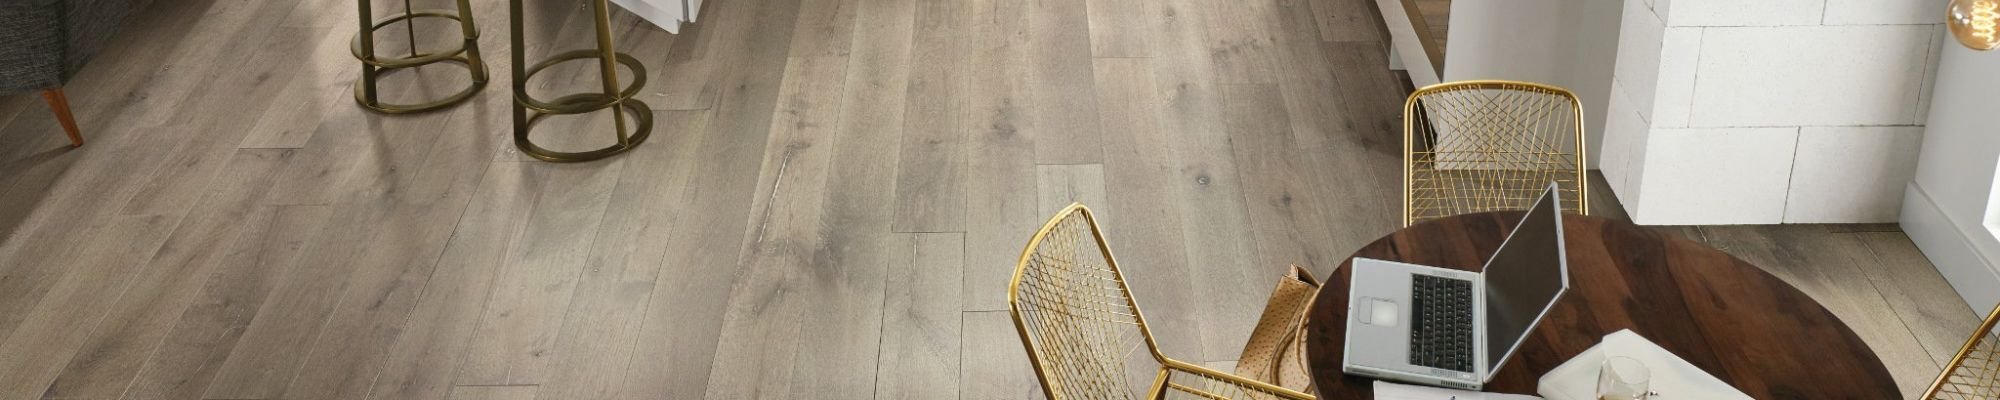 Kitchen design - Diamond Floor Covering in Monroe